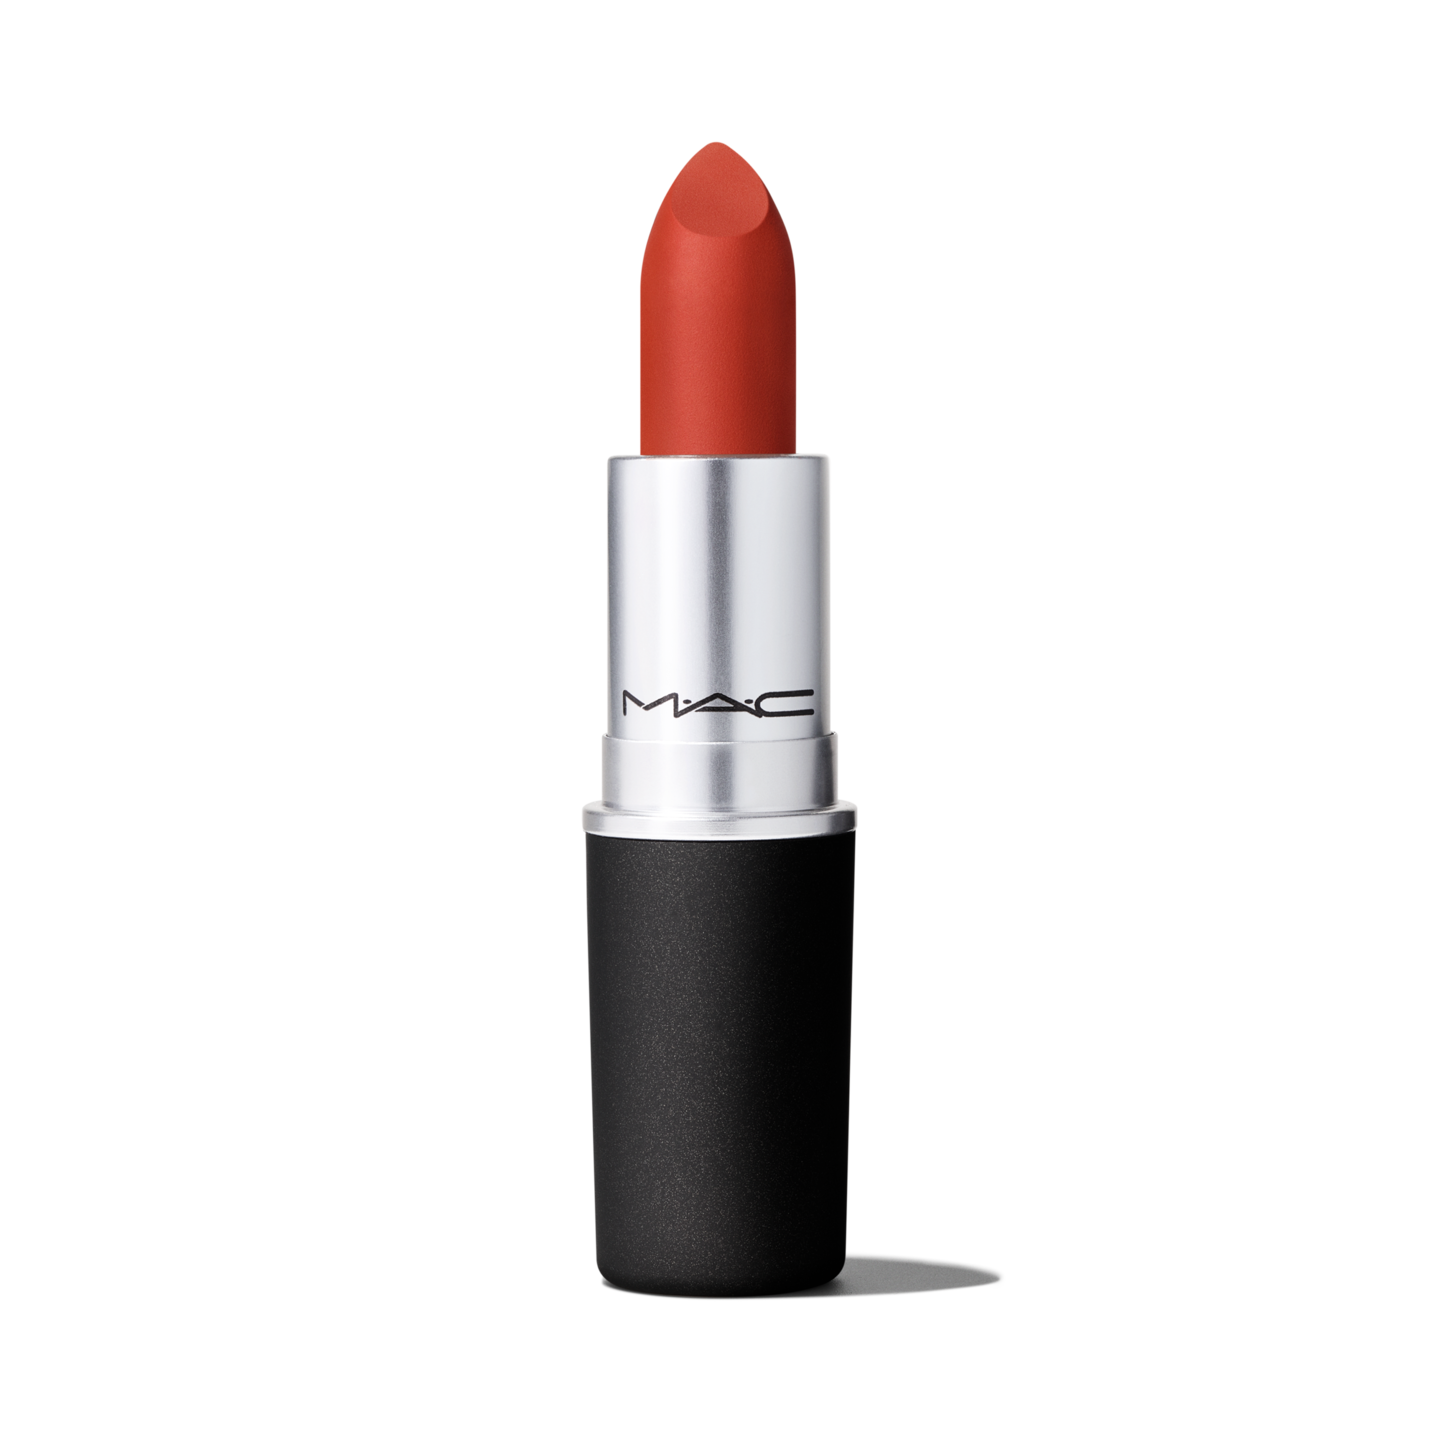 Mac love u back lipstick dupe - Best Lipstick Dupes